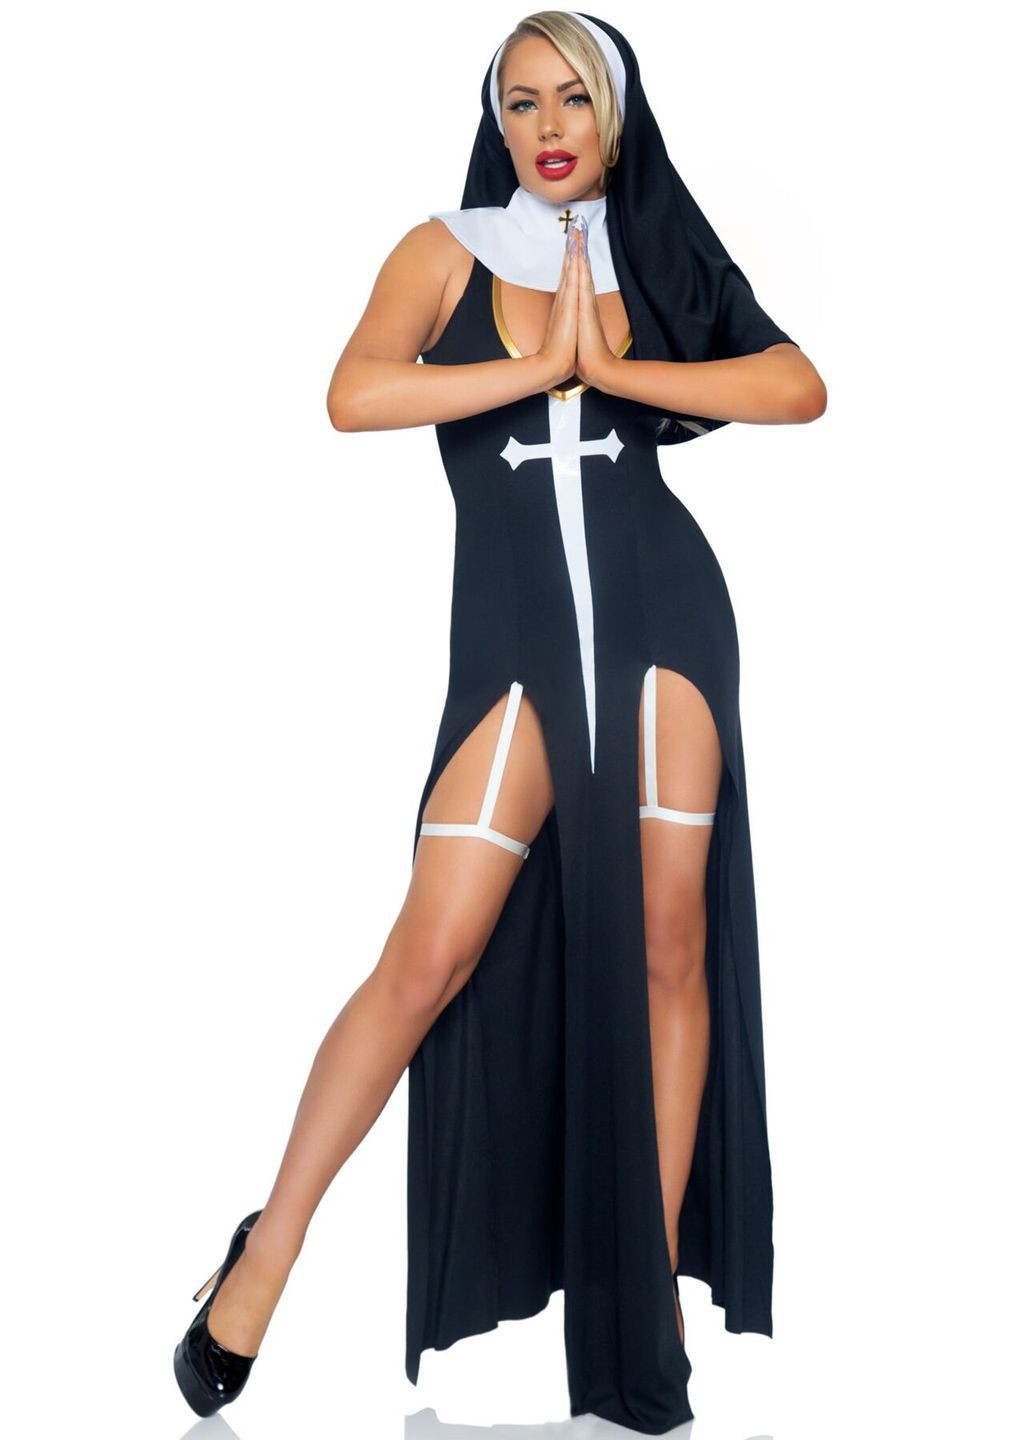 Костюм монашки-грешницы Sultry Sinner, платье, головной убор, воротник - CherryLove Leg Avenue (282966049)